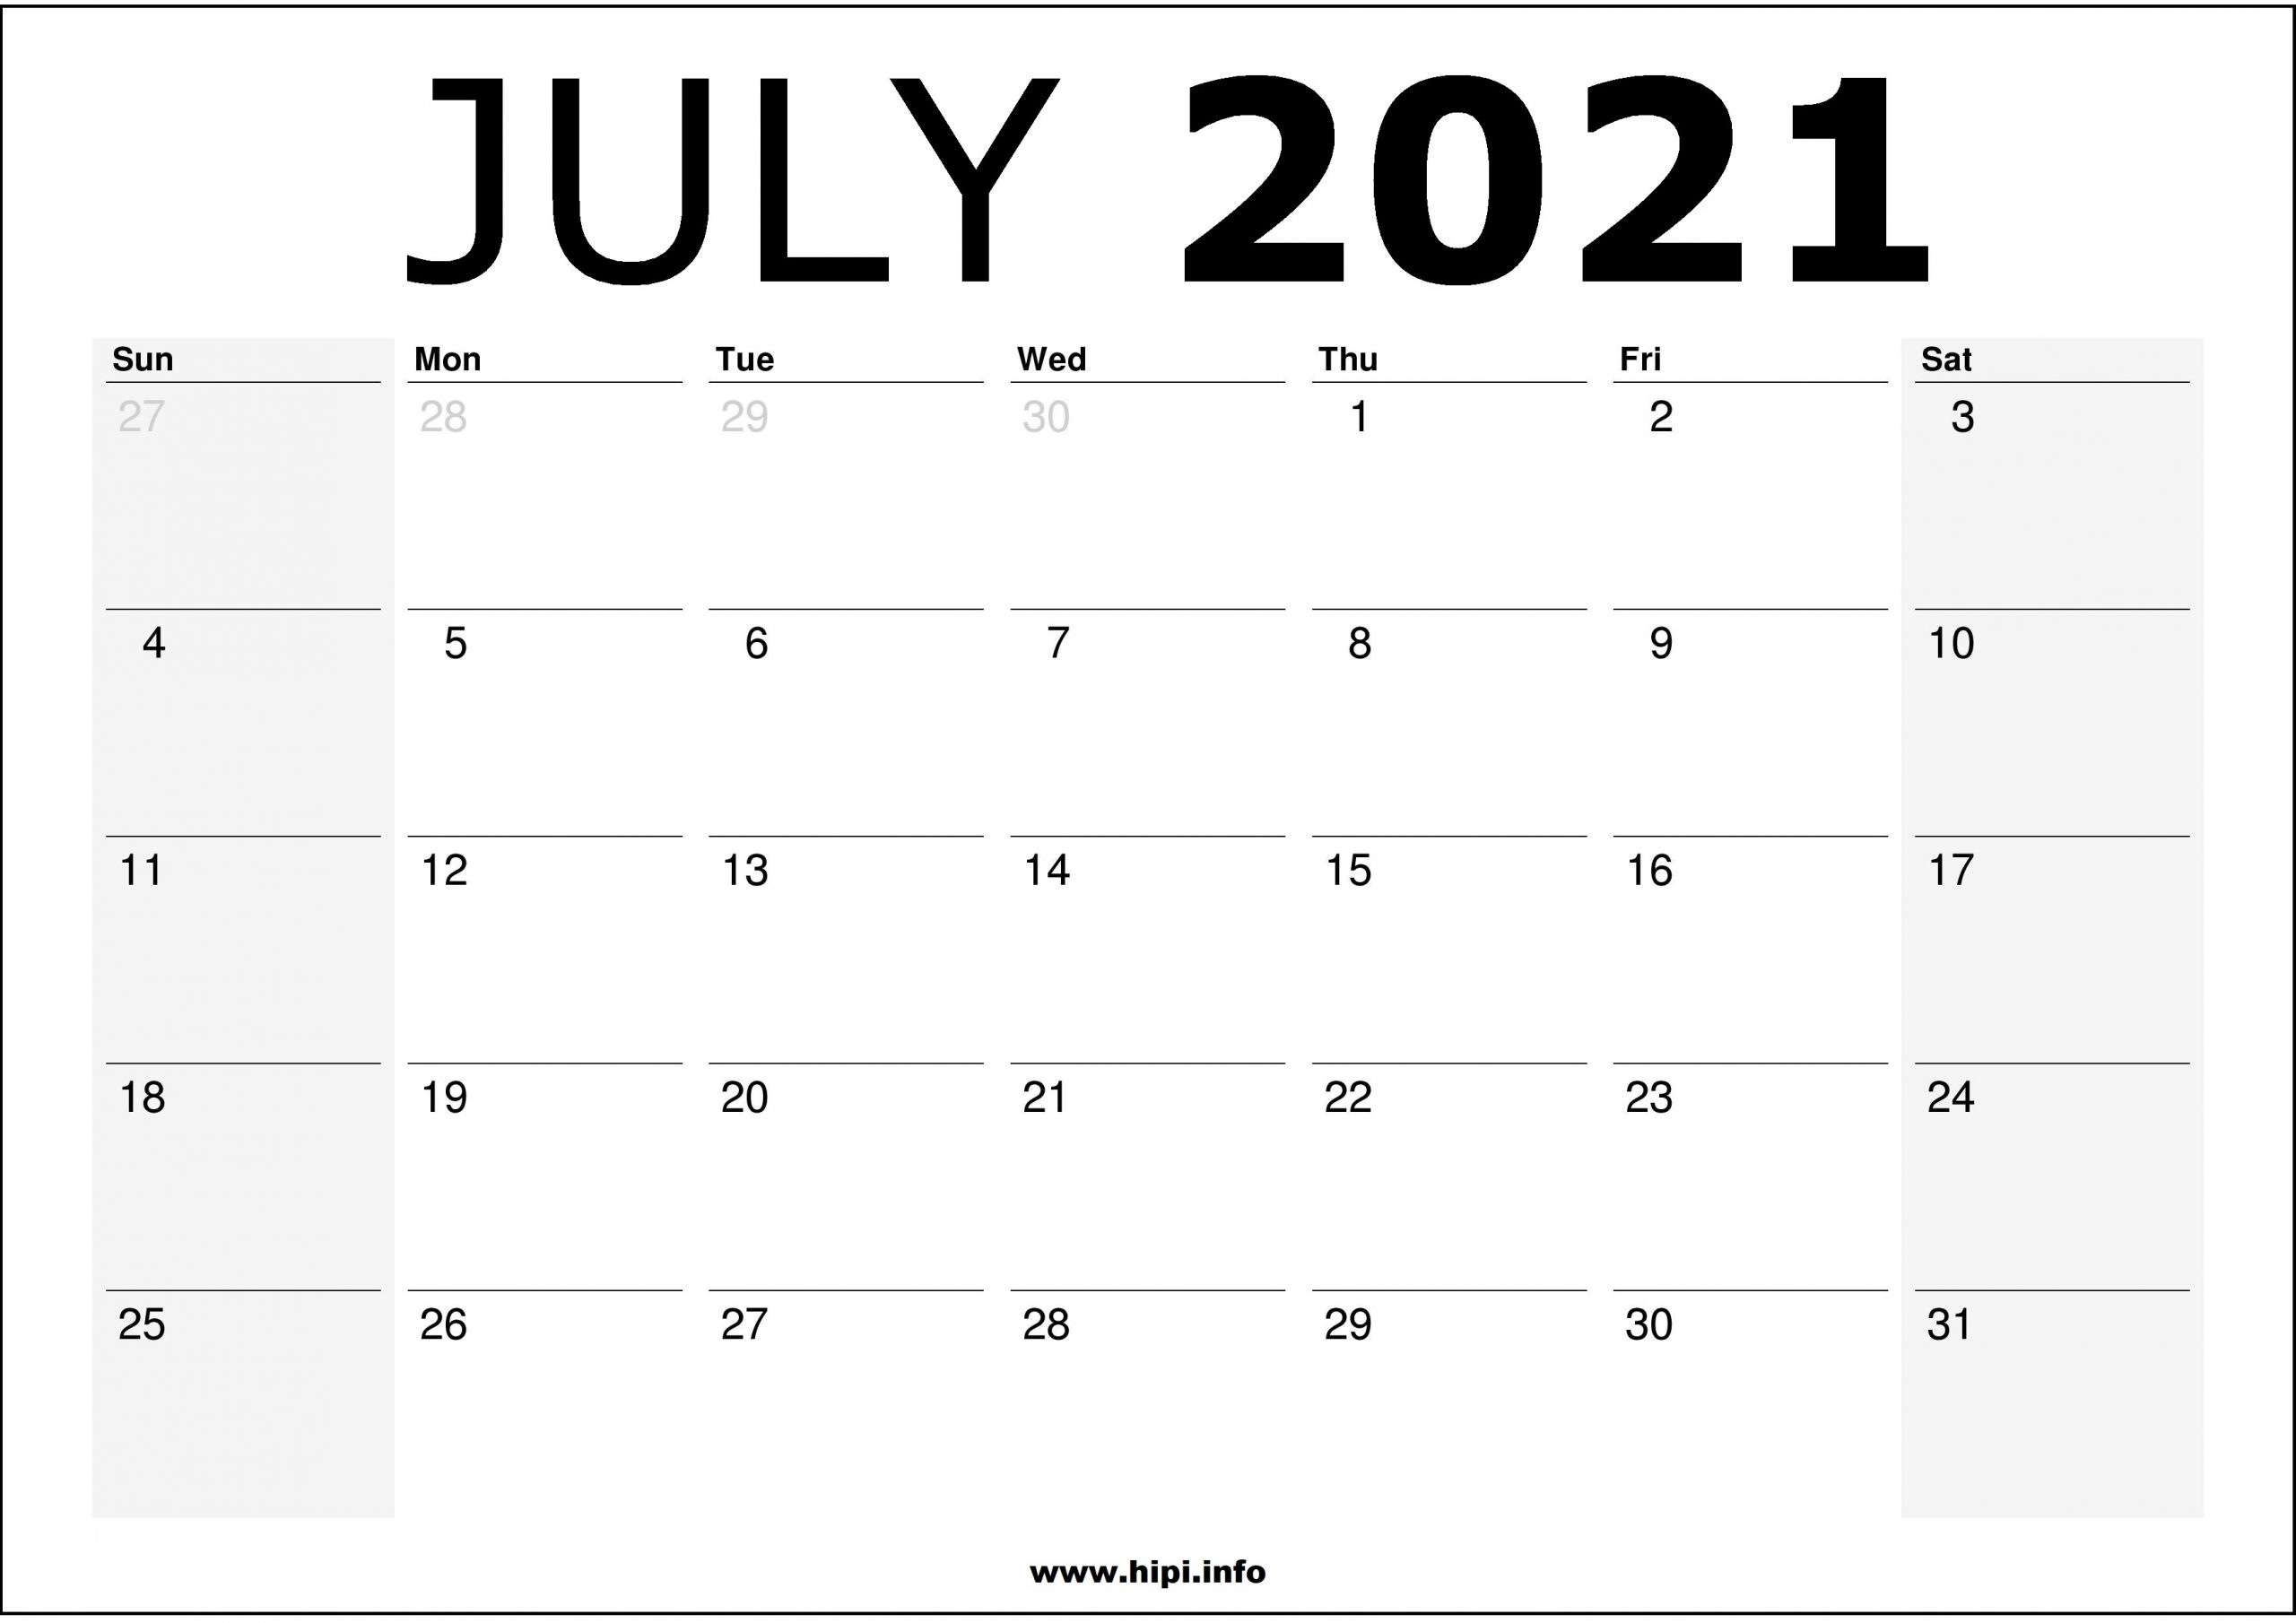 July 2021 Calendar Printable - Monthly Calendar Free